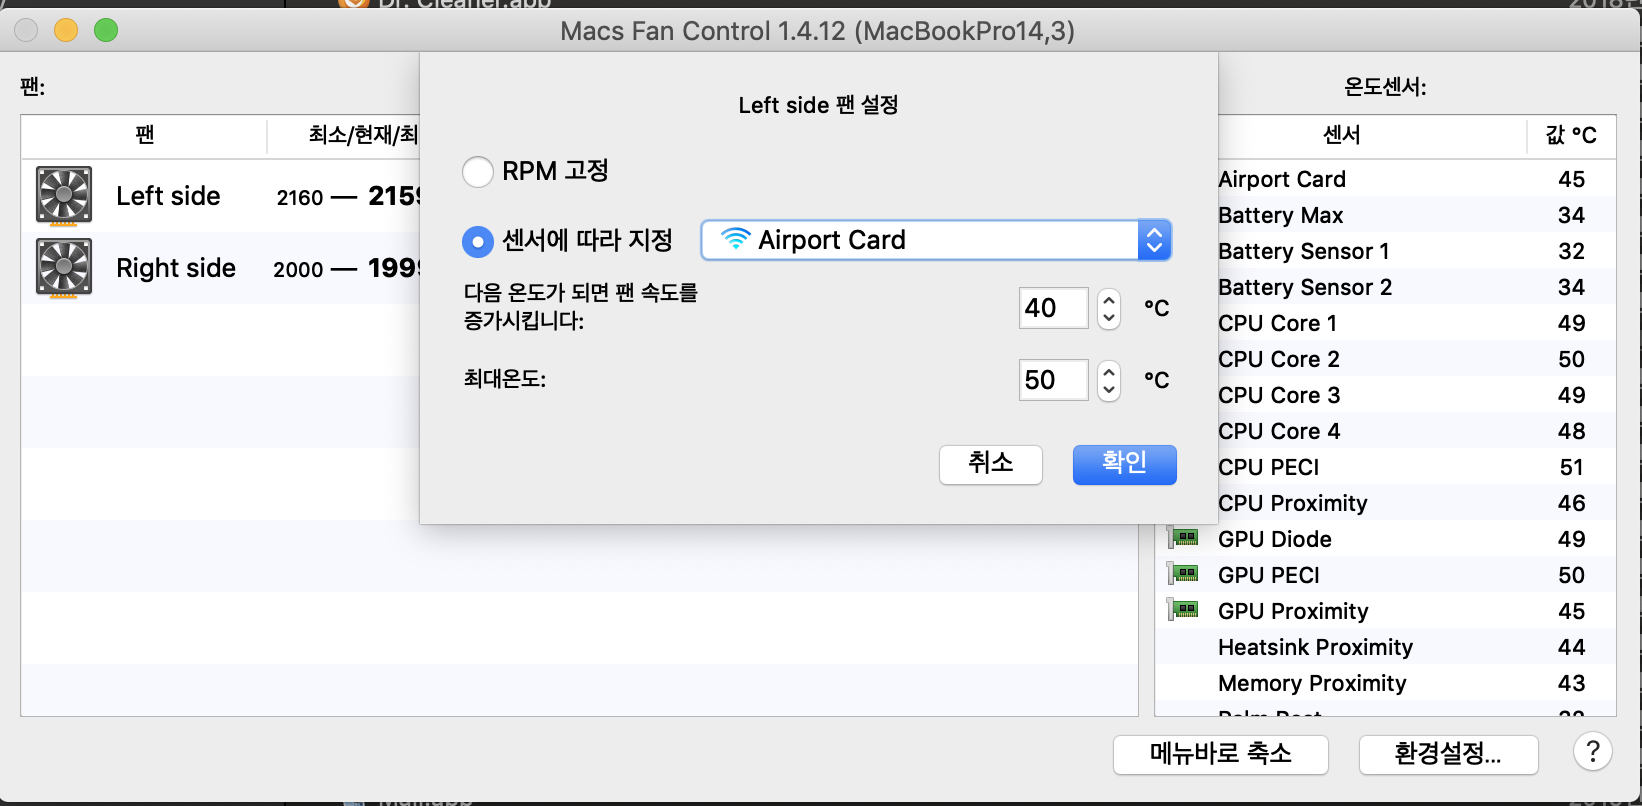 macs fan control macbook pro which sensor